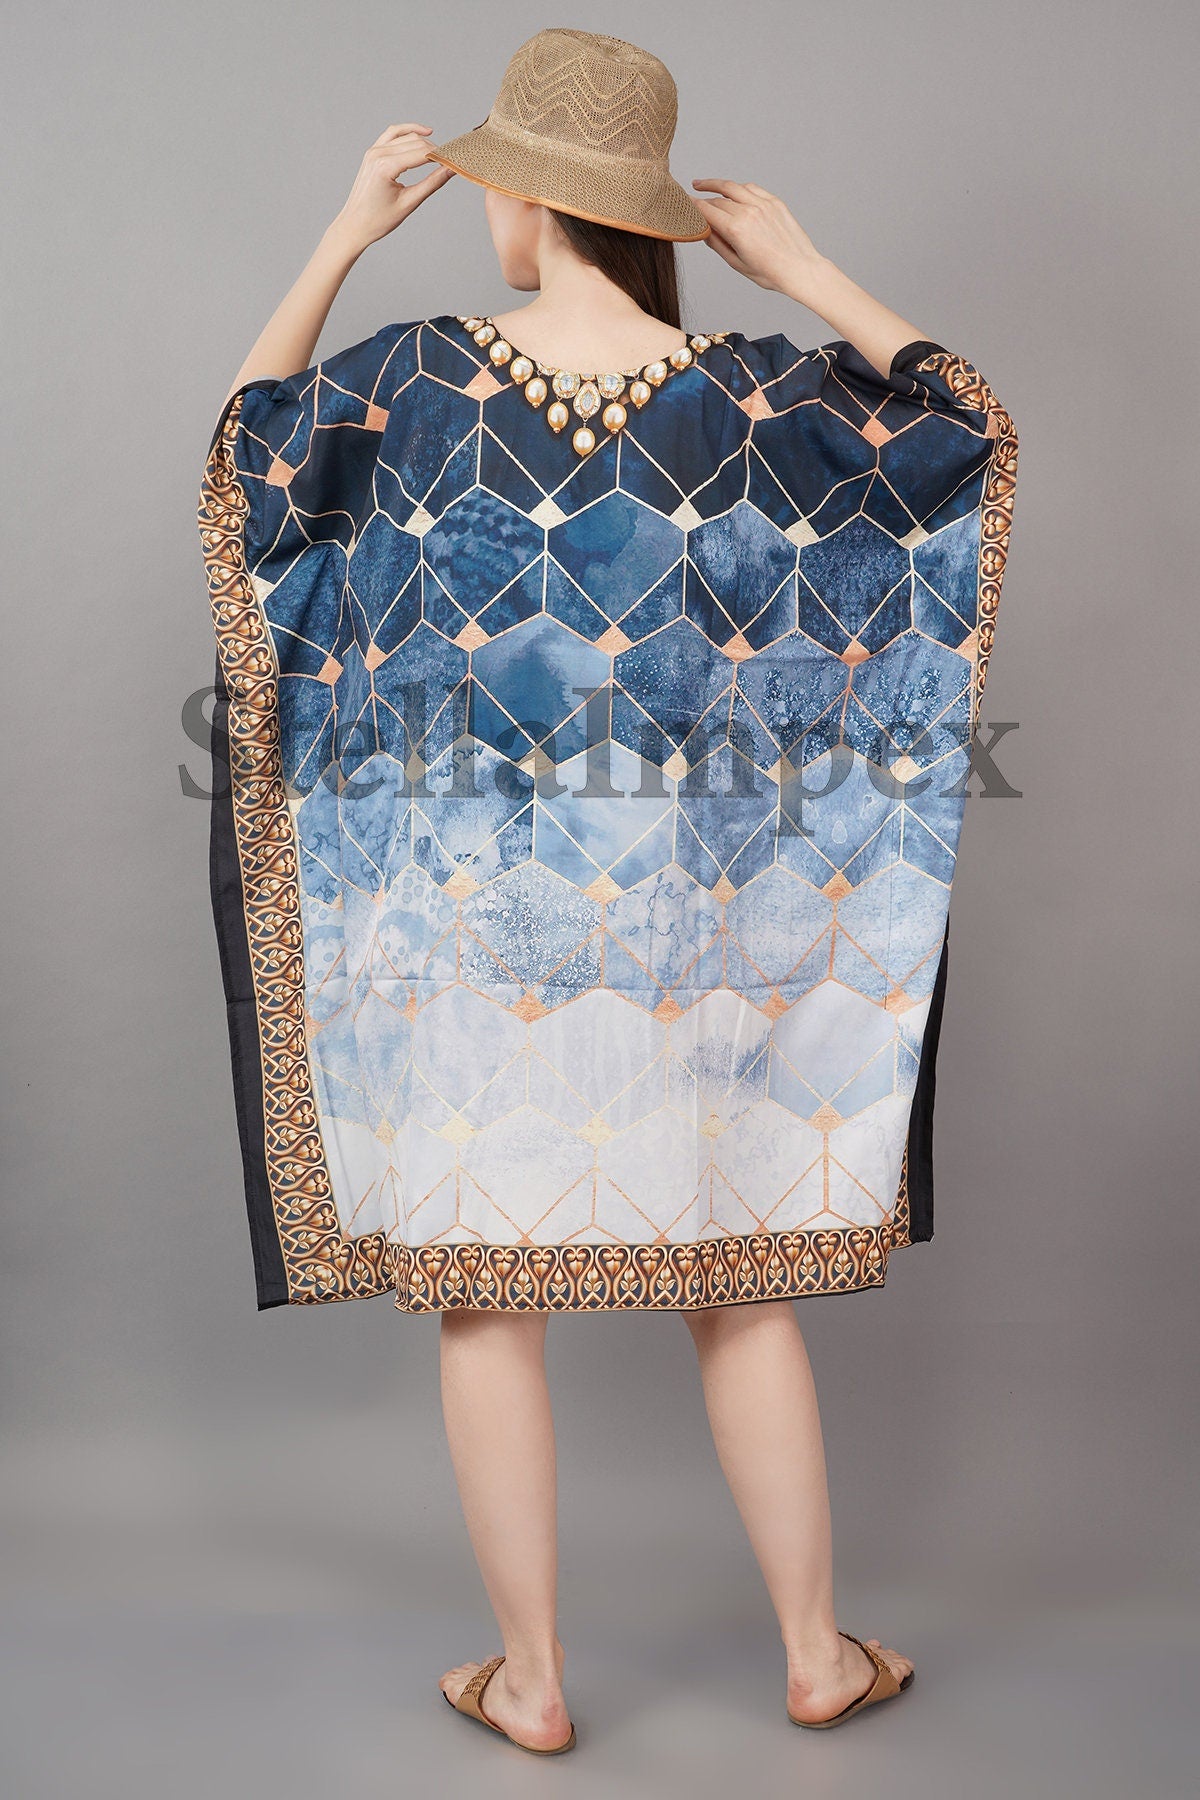 Trendy Crepe Silk Kaftan, Elegant Blue Short Caftan Resort Wear Beach Dress Boho Kaftan, Gift for Her